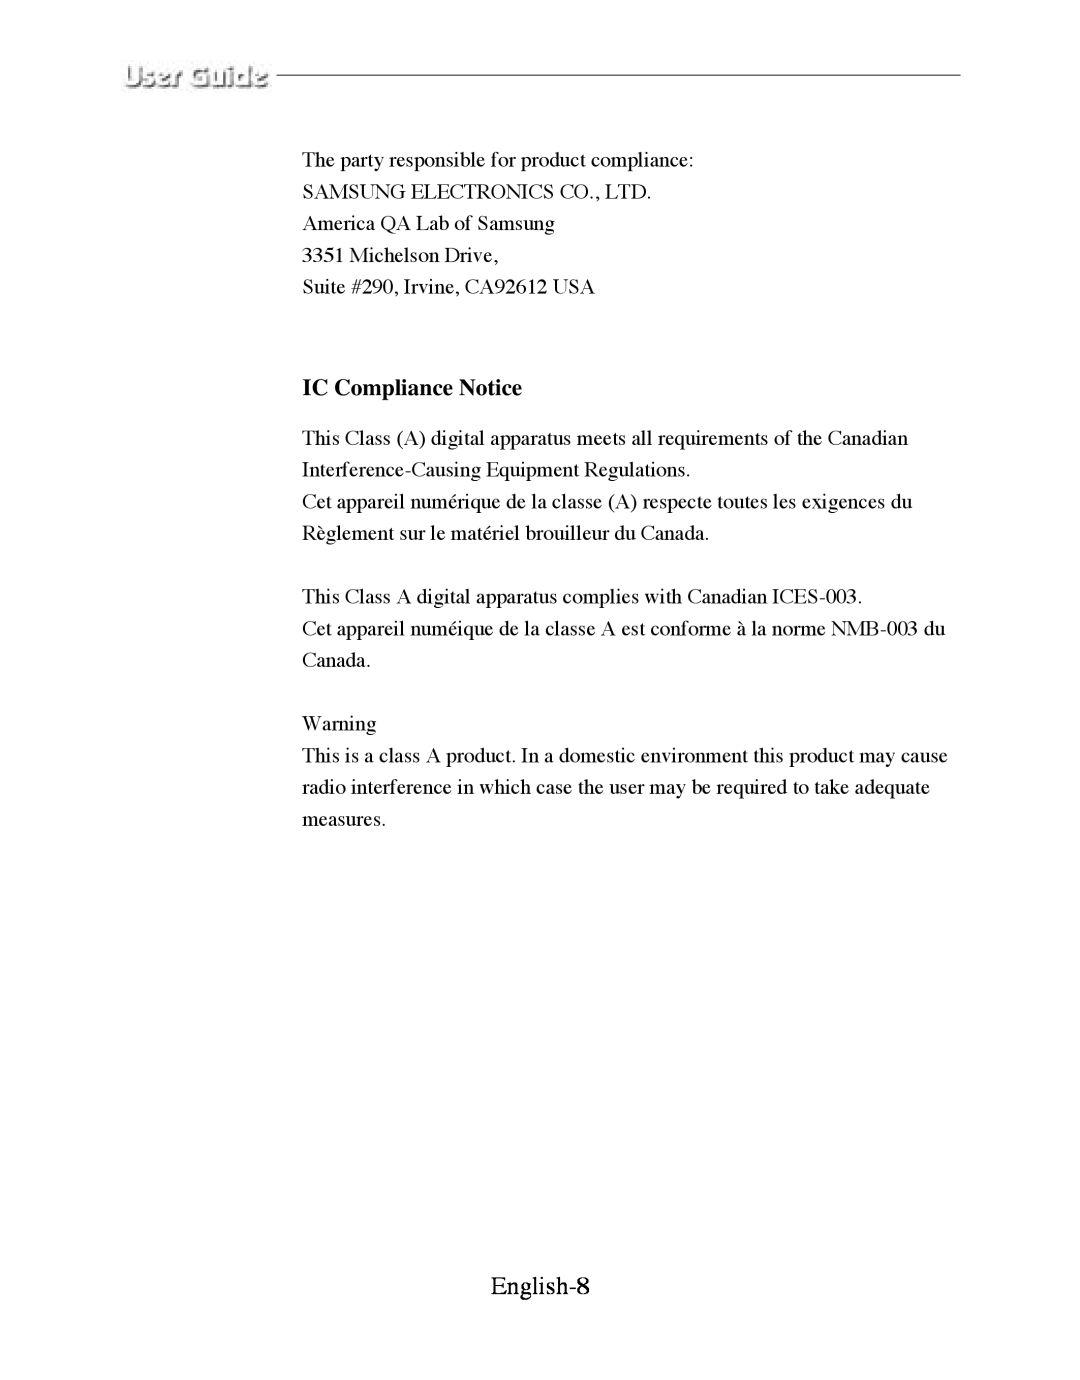 Samsung SMT-170P manual English-8, IC Compliance Notice 